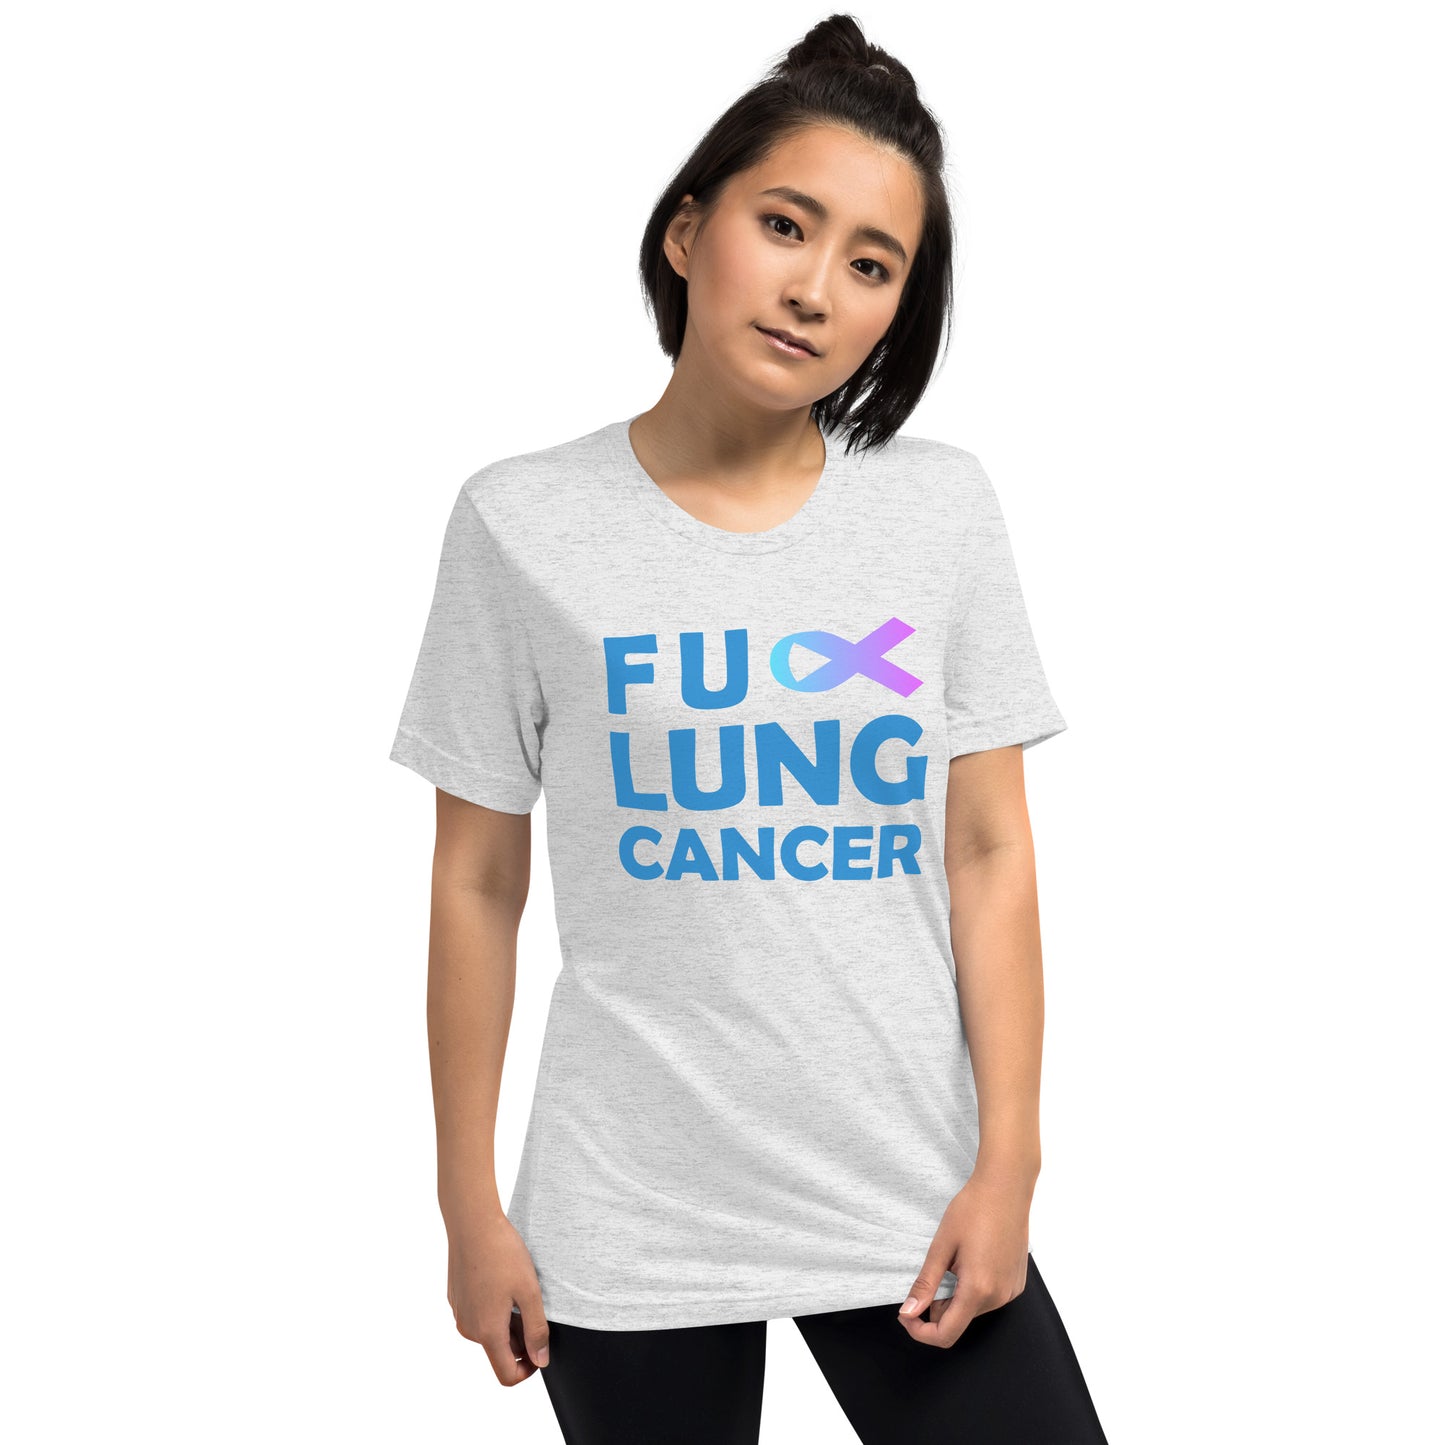 FU Lung Cancer Premium Tri-Blend Unisex Short Sleeve T-shirt